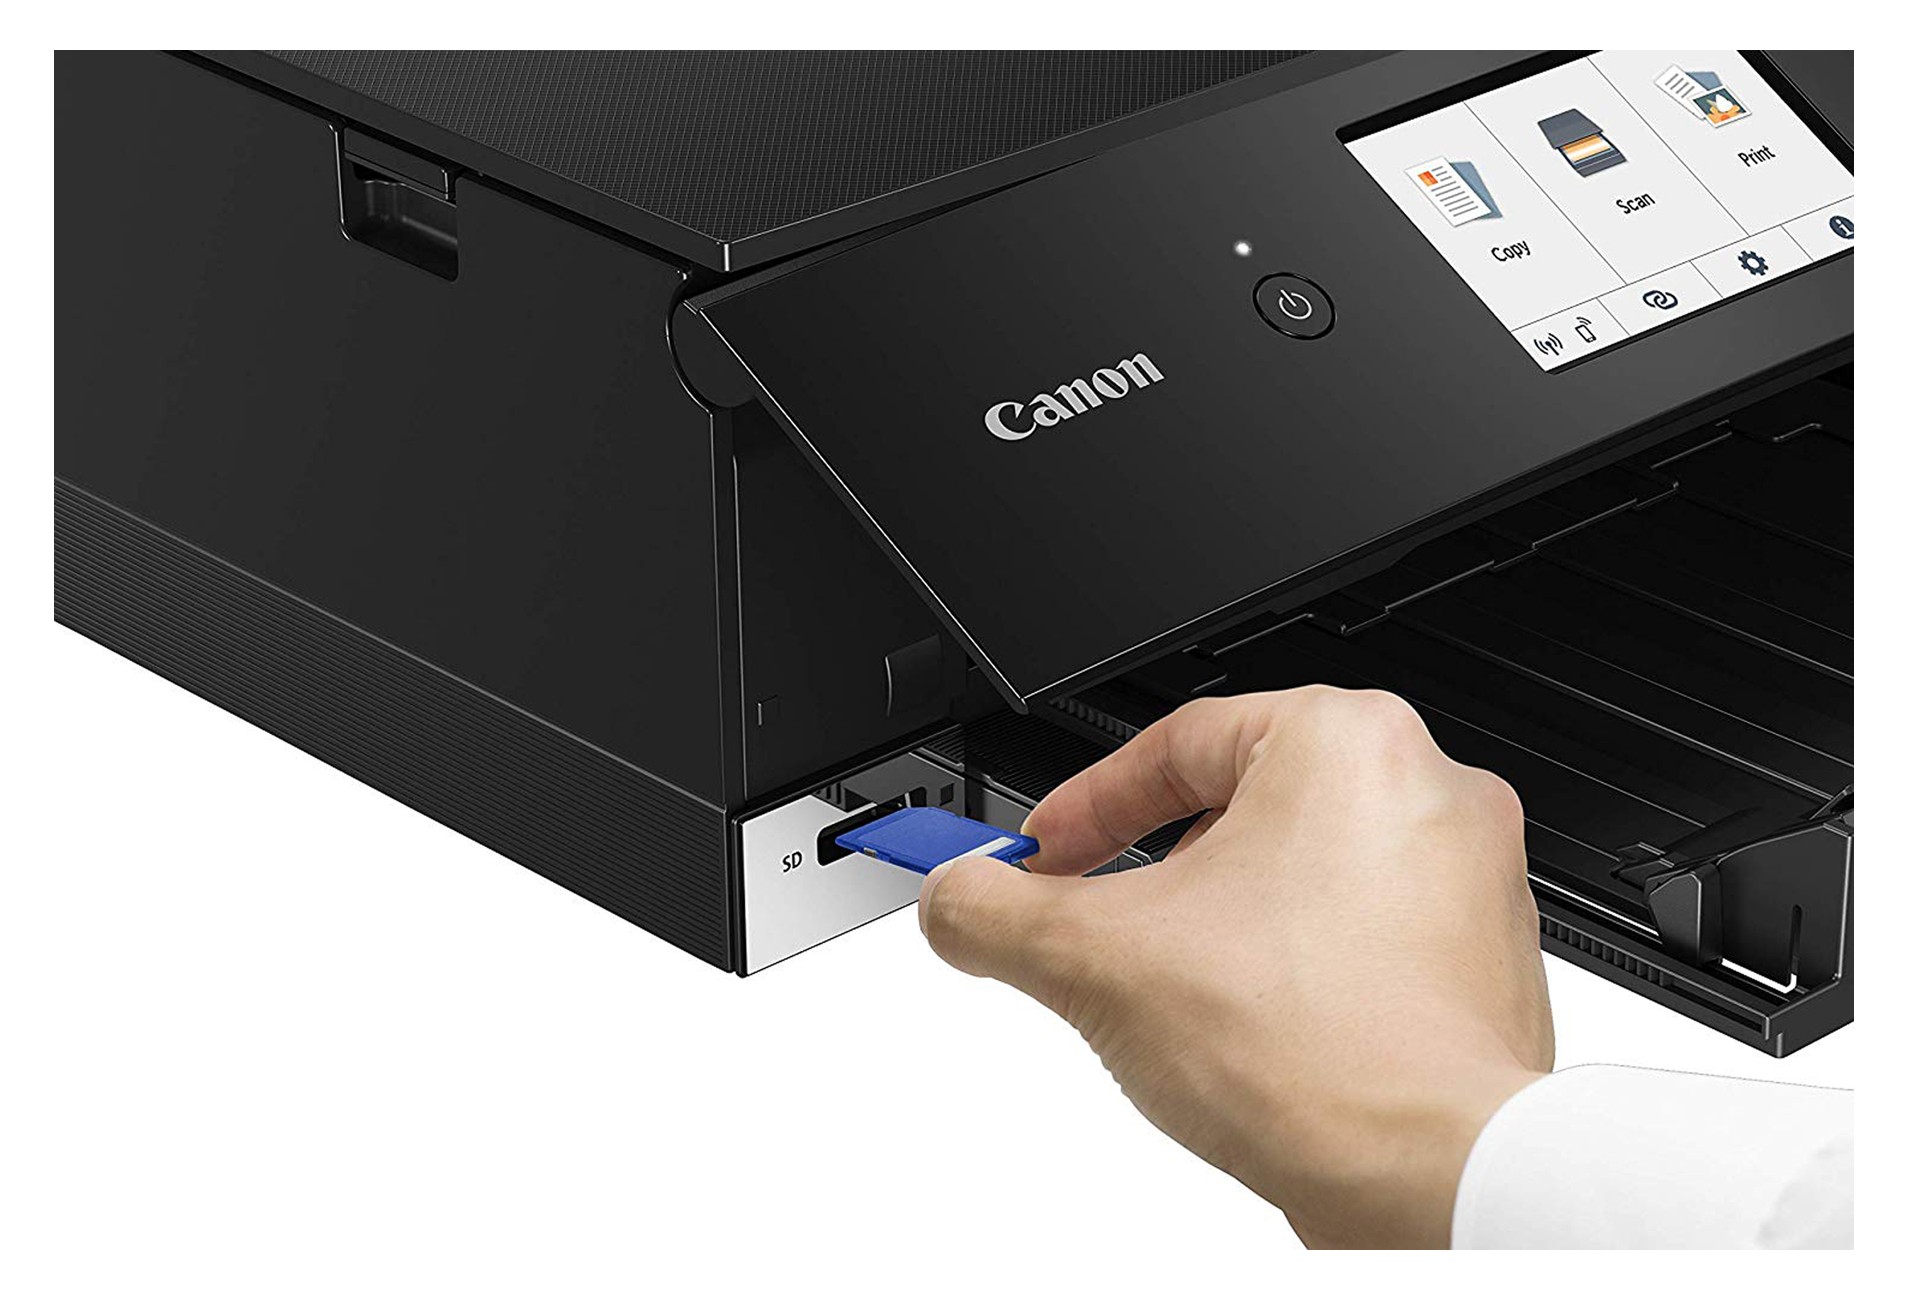 Printers That Enlarge And Reduce Copies - hp printers that enlarge and reduce copies